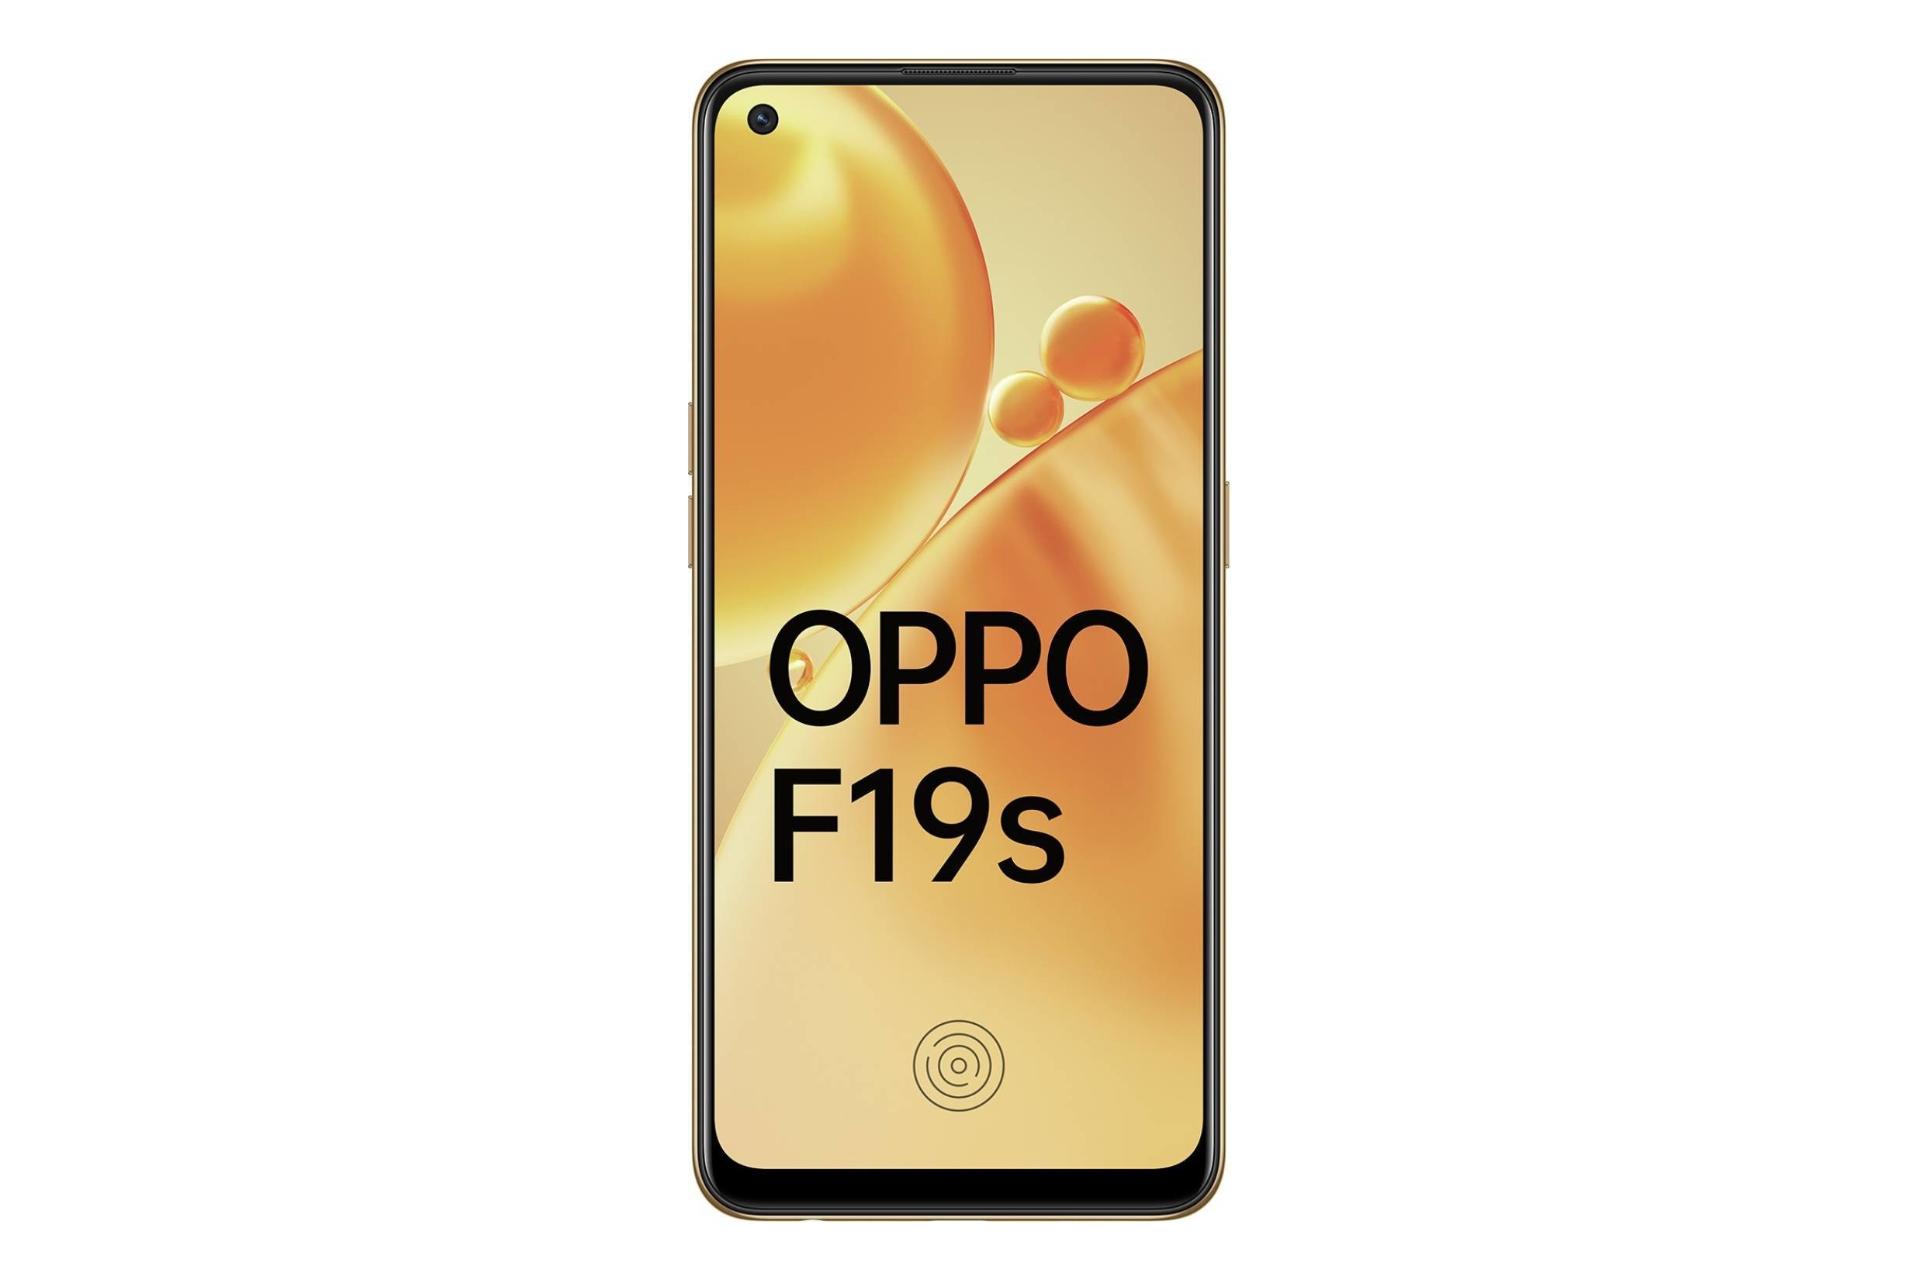 پنل جلو گوشی موبایل اف 19 اس اوپو / Oppo F19s طلایی